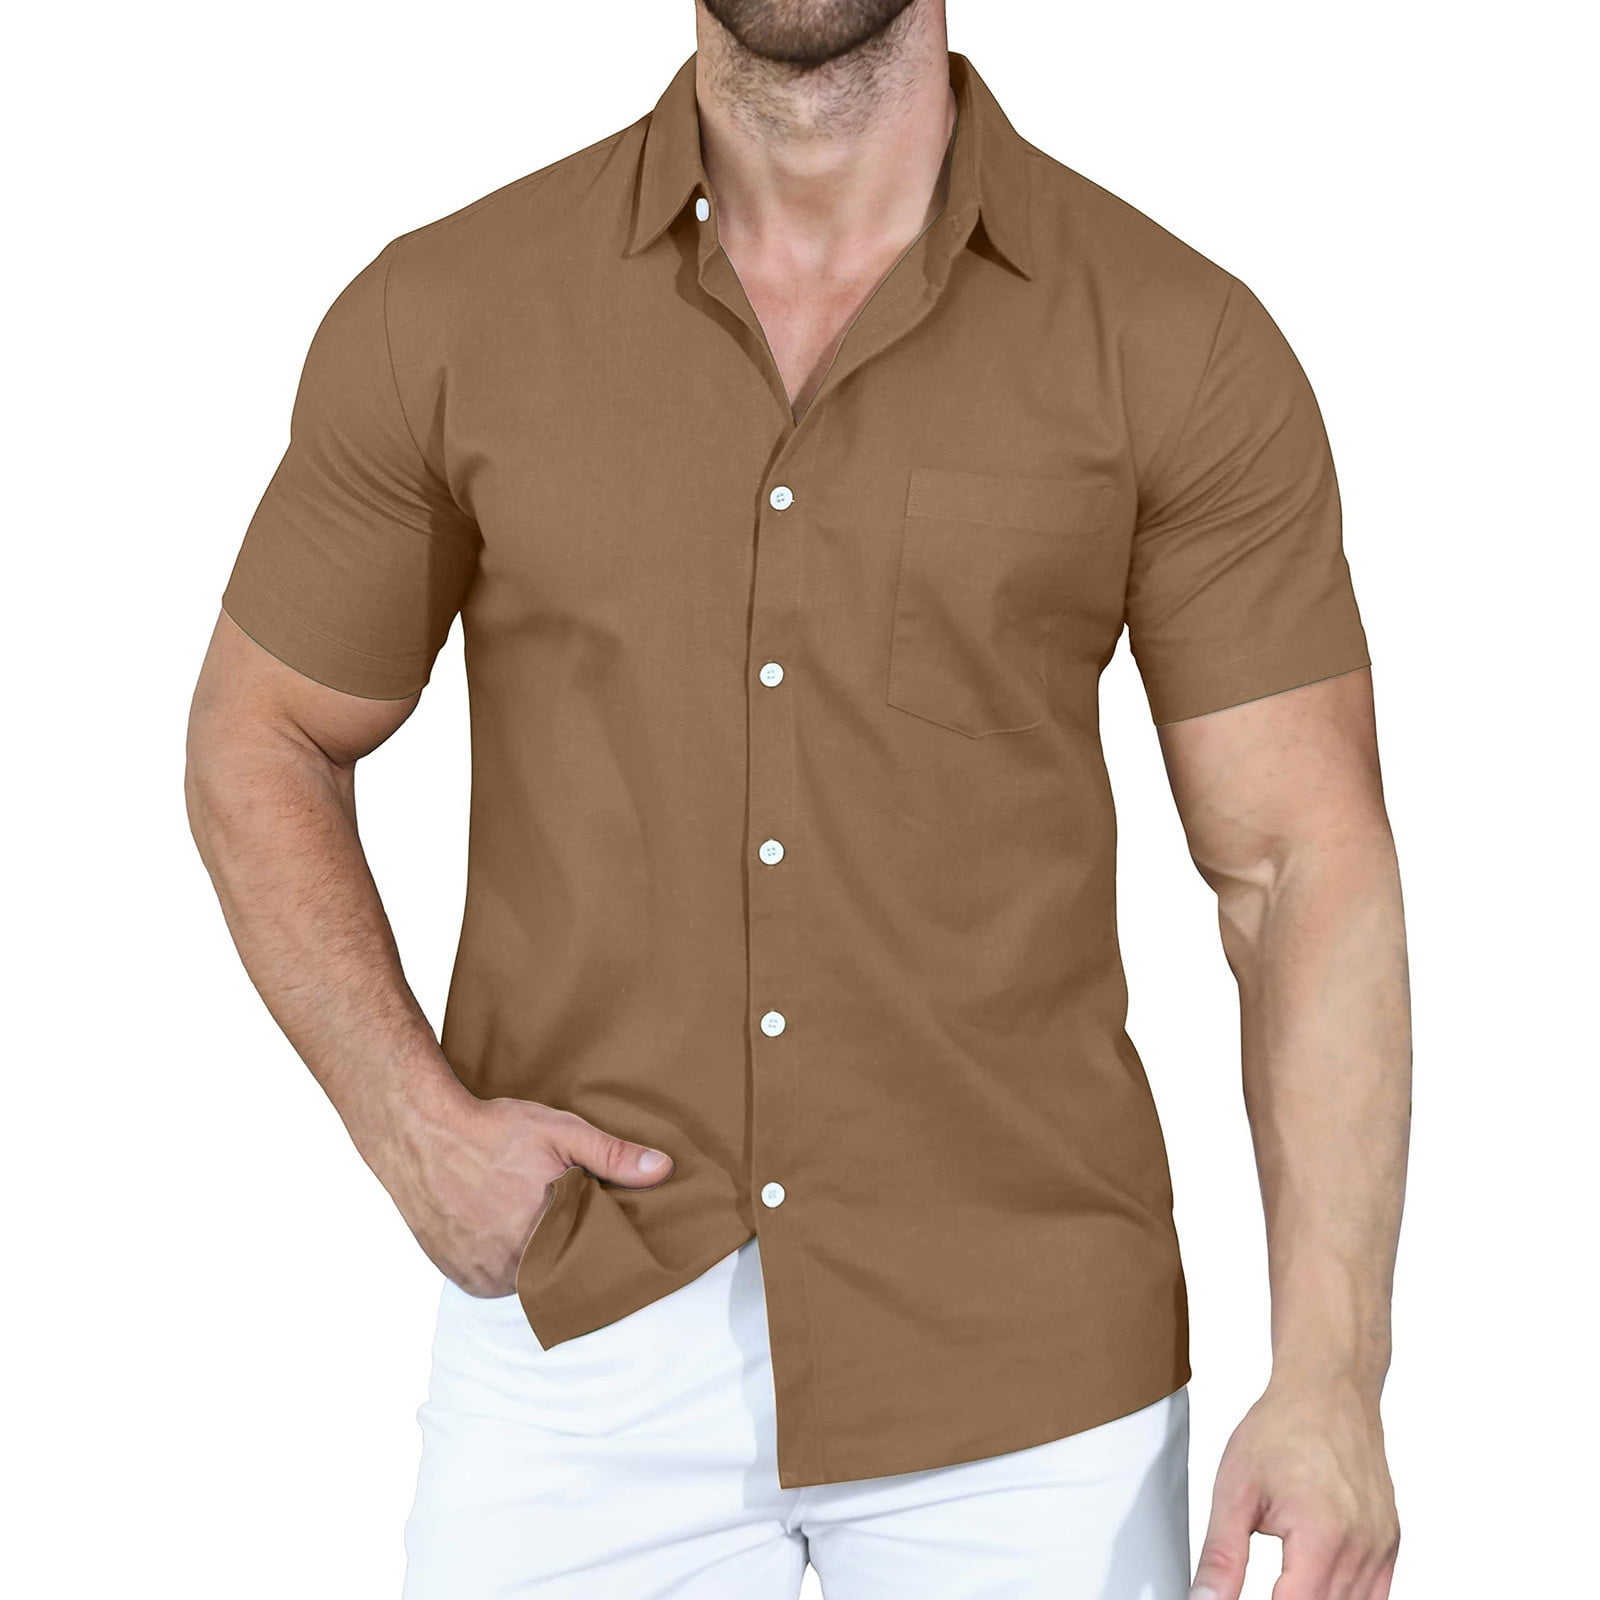 YYDGH Mens Dress Shirts Short Sleeve Button Up Shirts Business